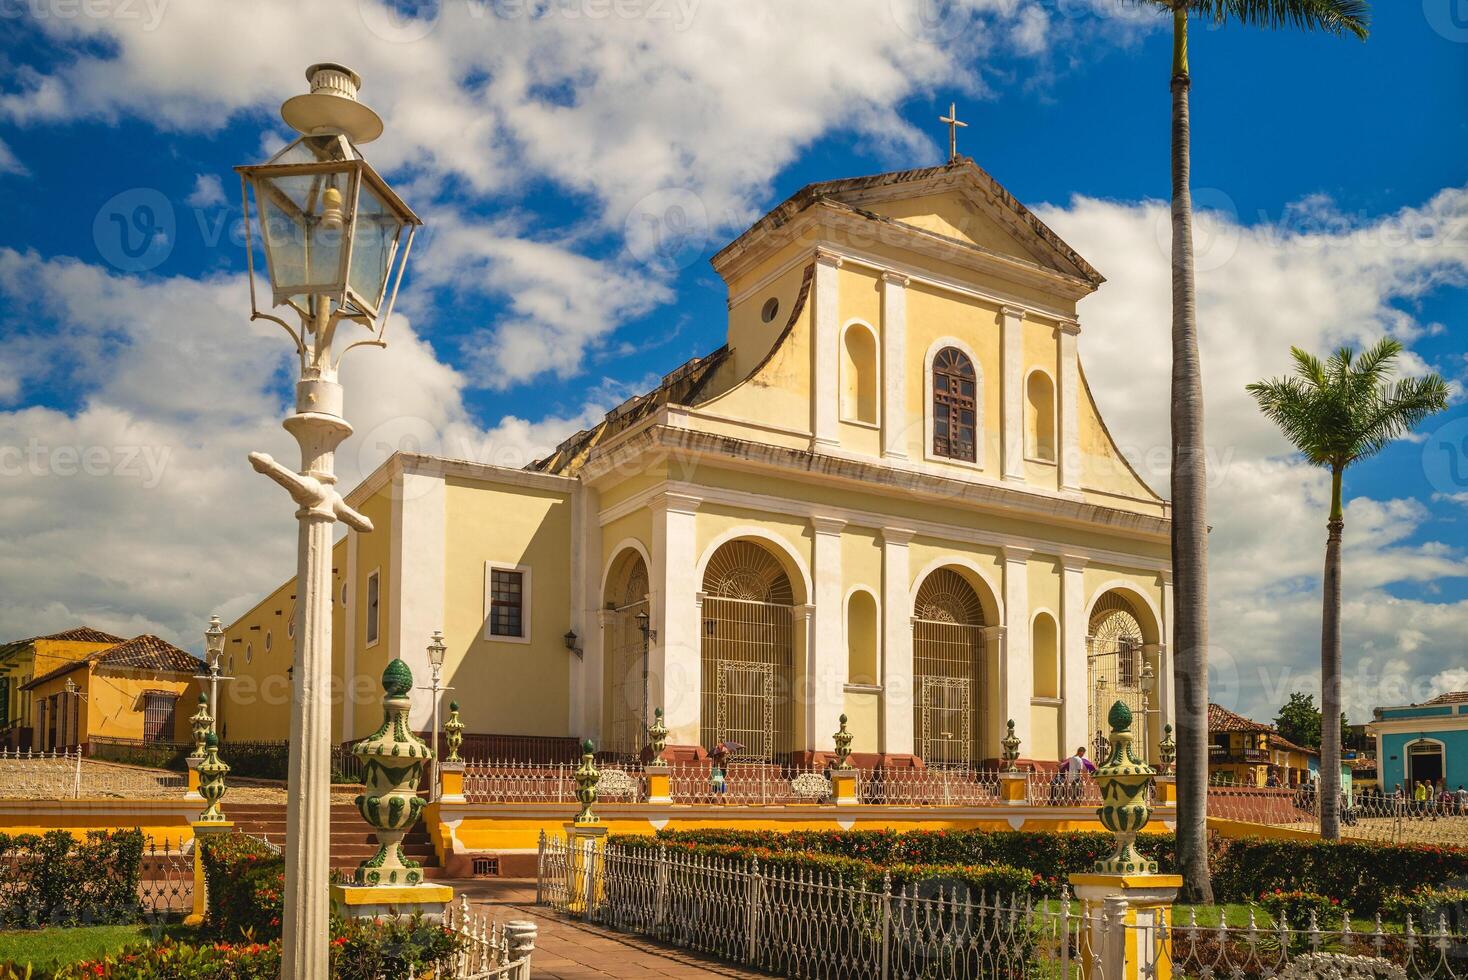 kerk van de heilig drieëenheid, iglesia parroquiaal de la santisima Trinidad in Cuba foto